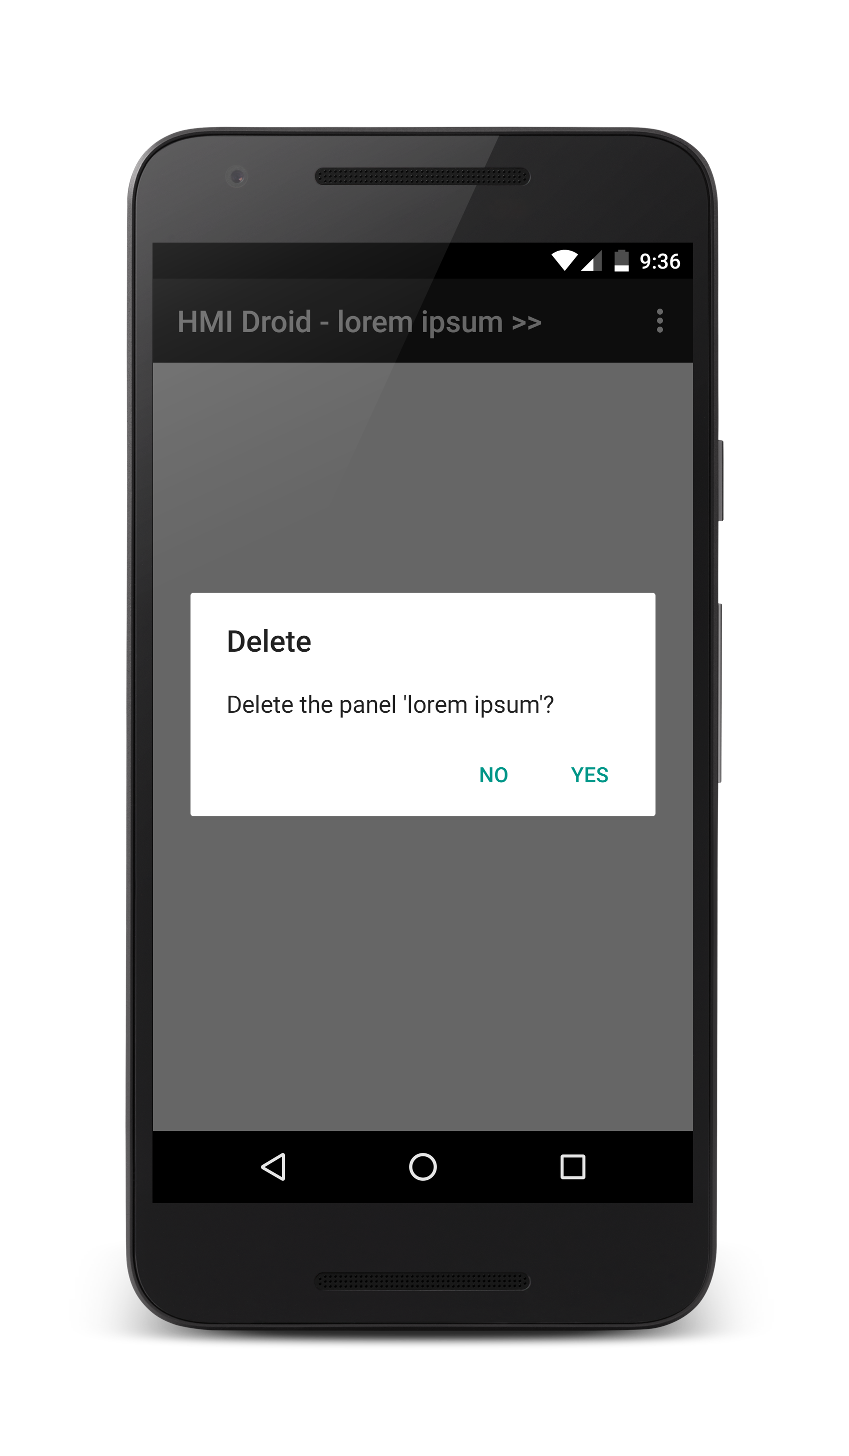 HMI Droid - Delete panel (page)